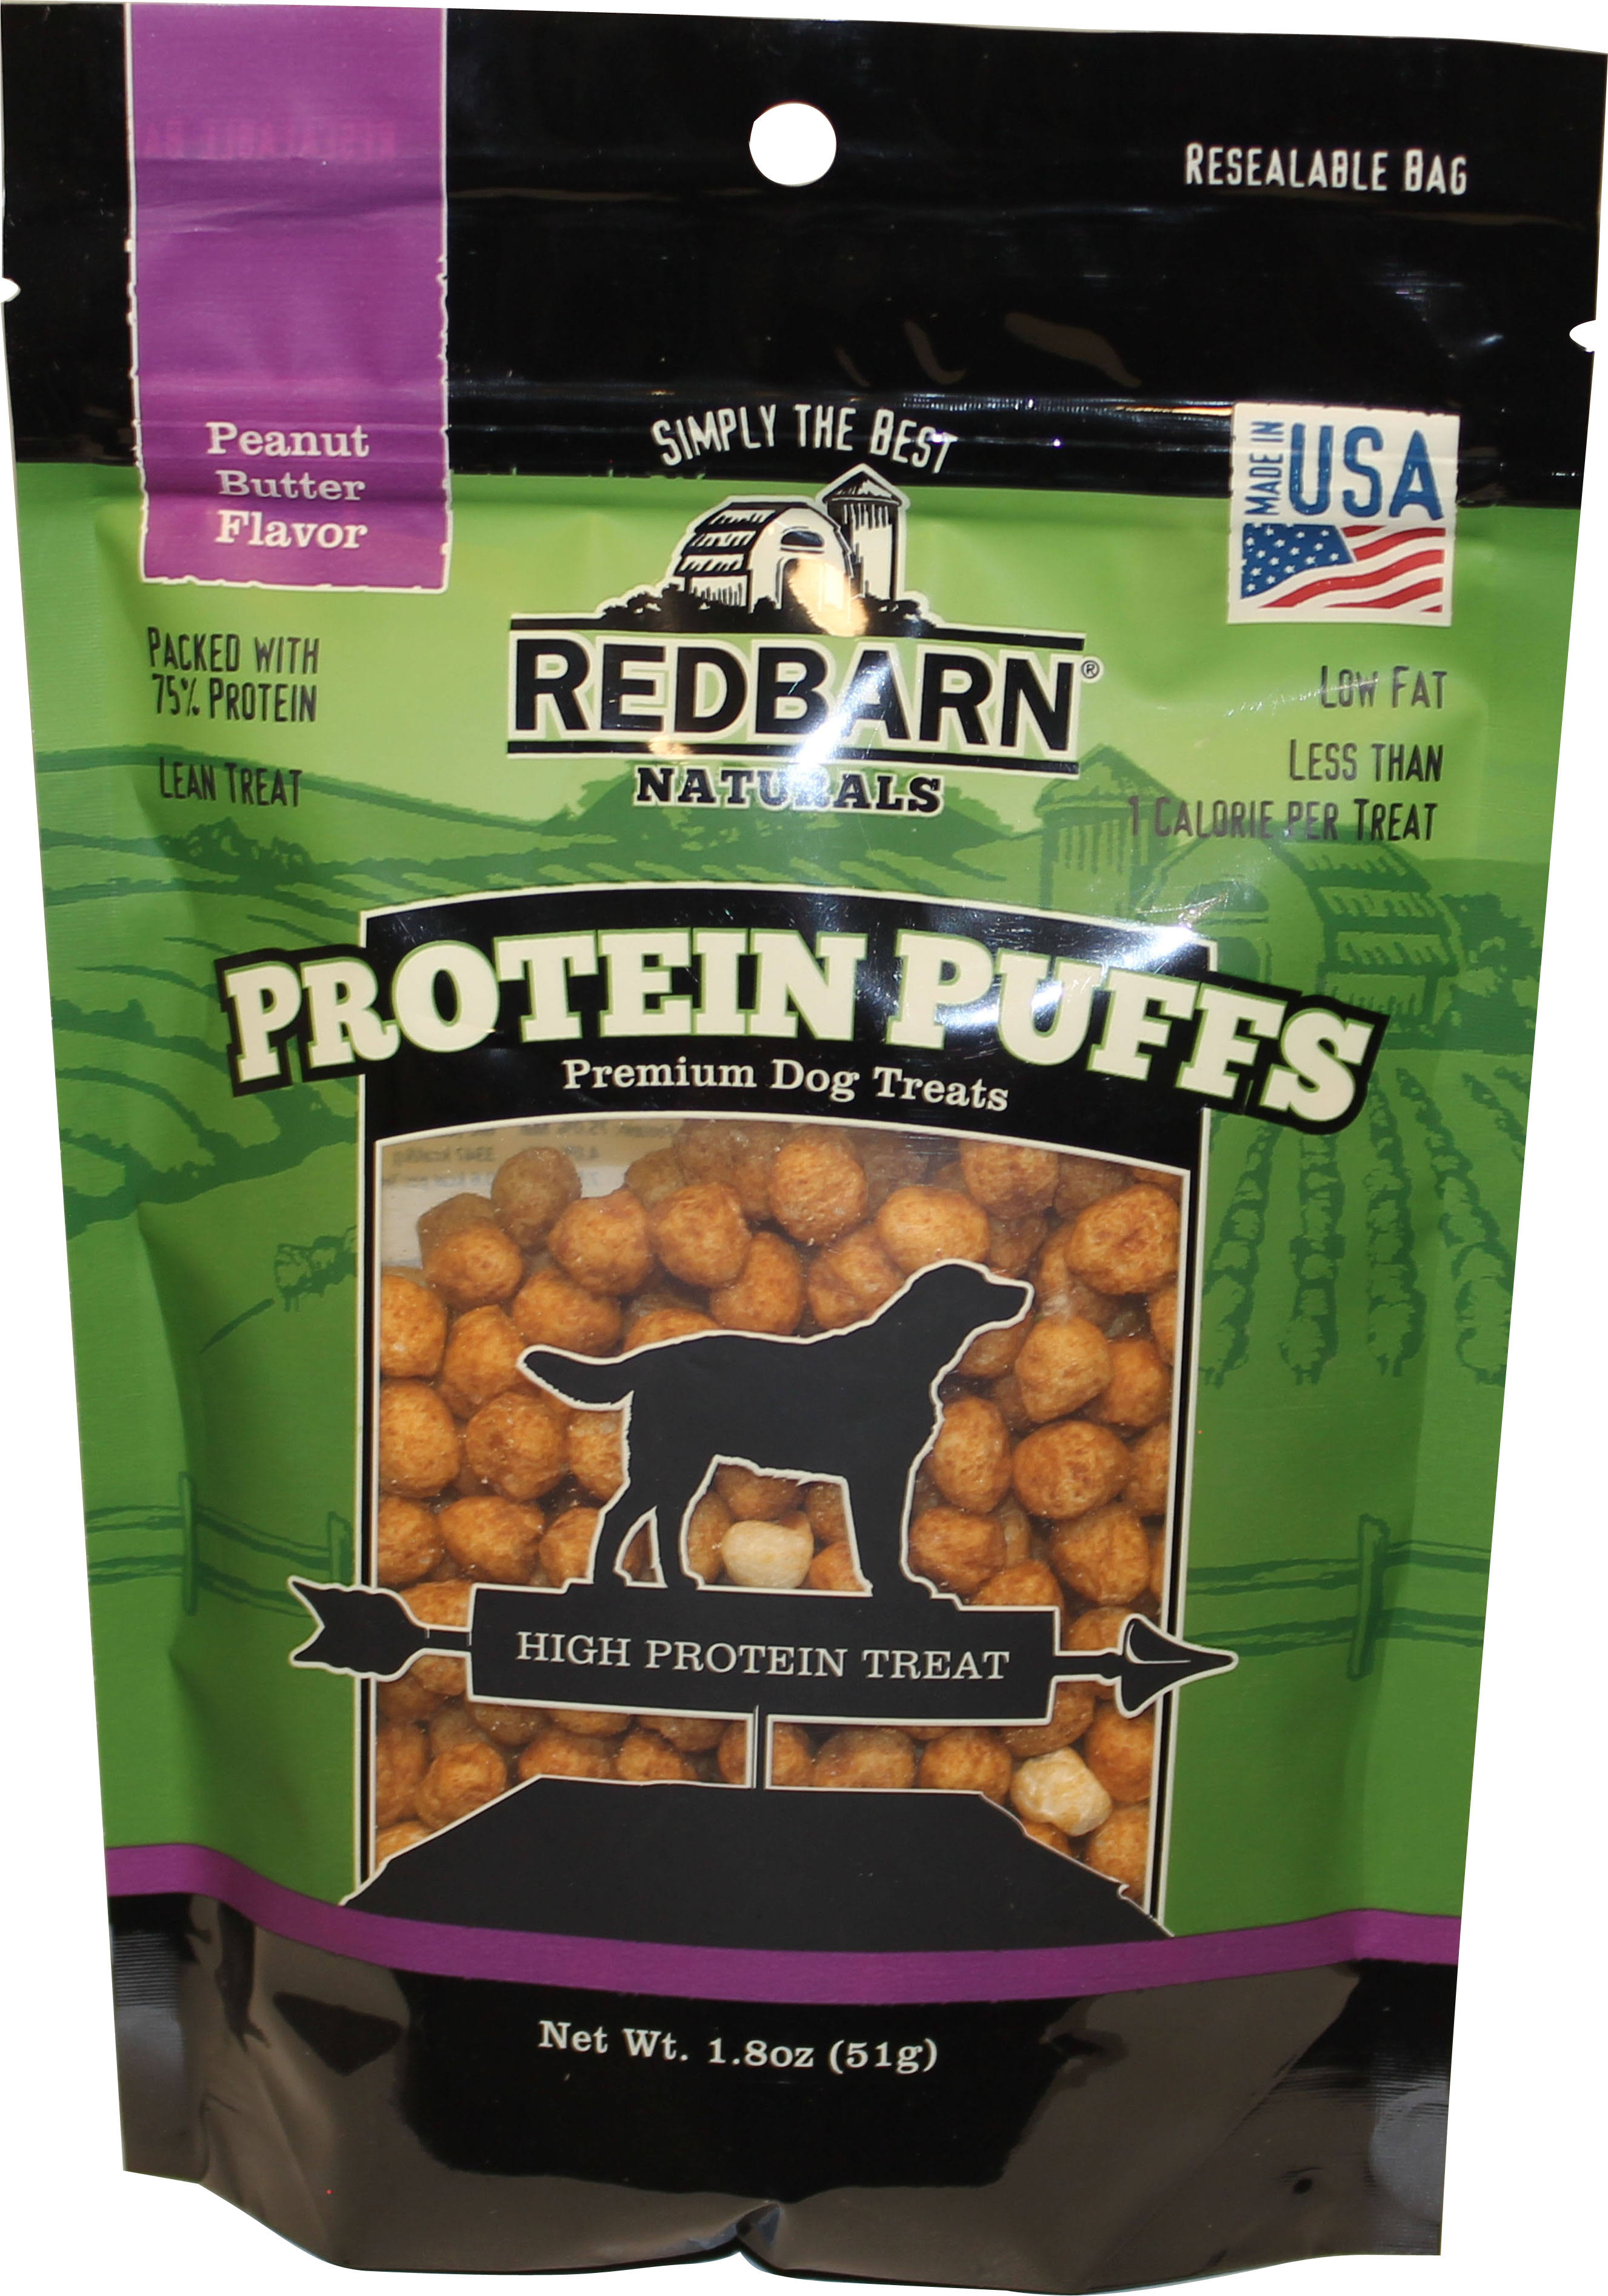 Redbarn 1.8 oz Peanut Butter Protein Puffs Dog Treats